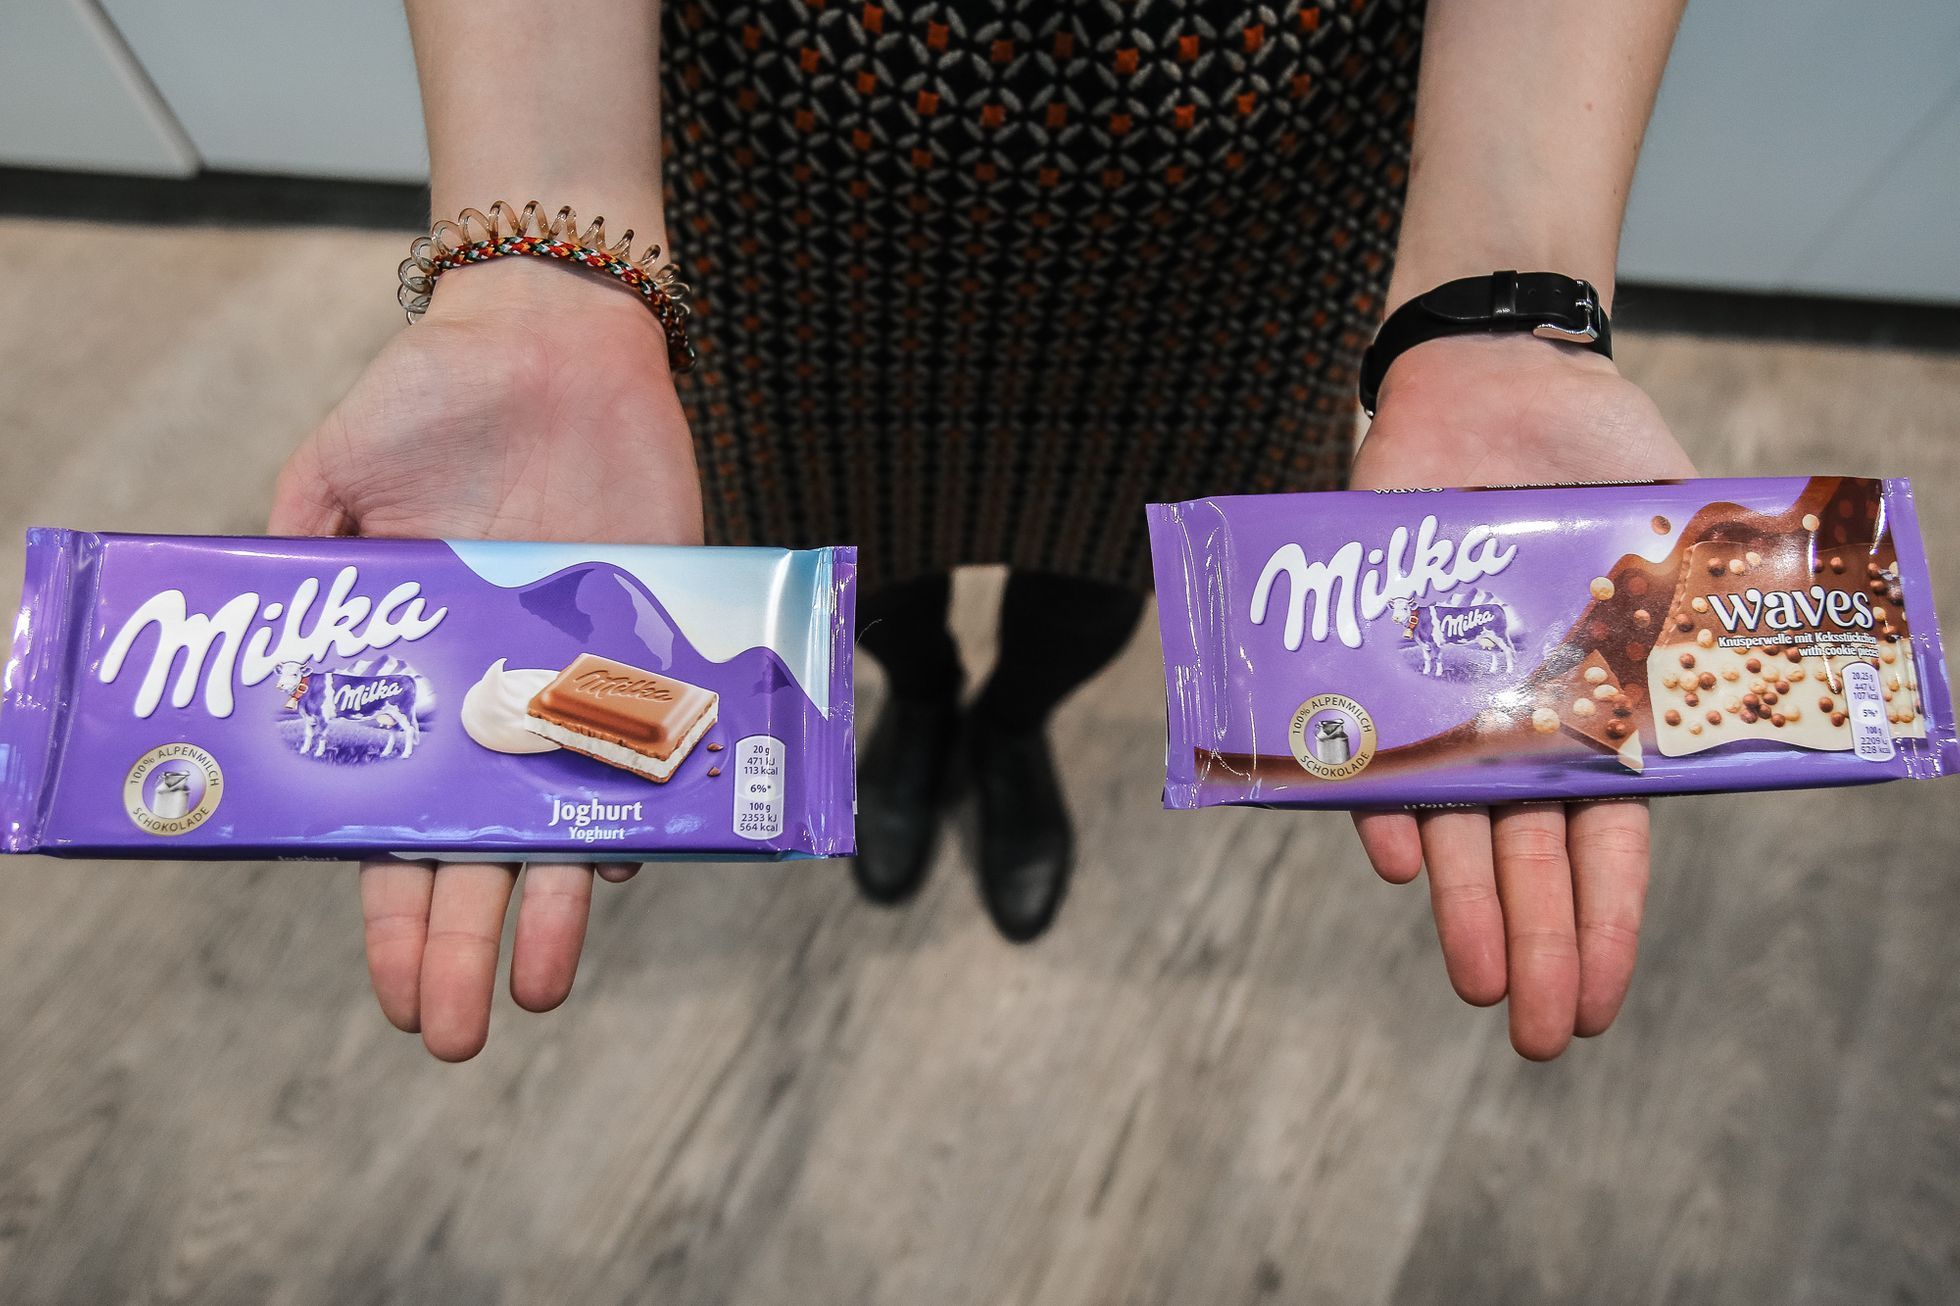 Čokoláda Milka, porovnání hmotnosti a původu